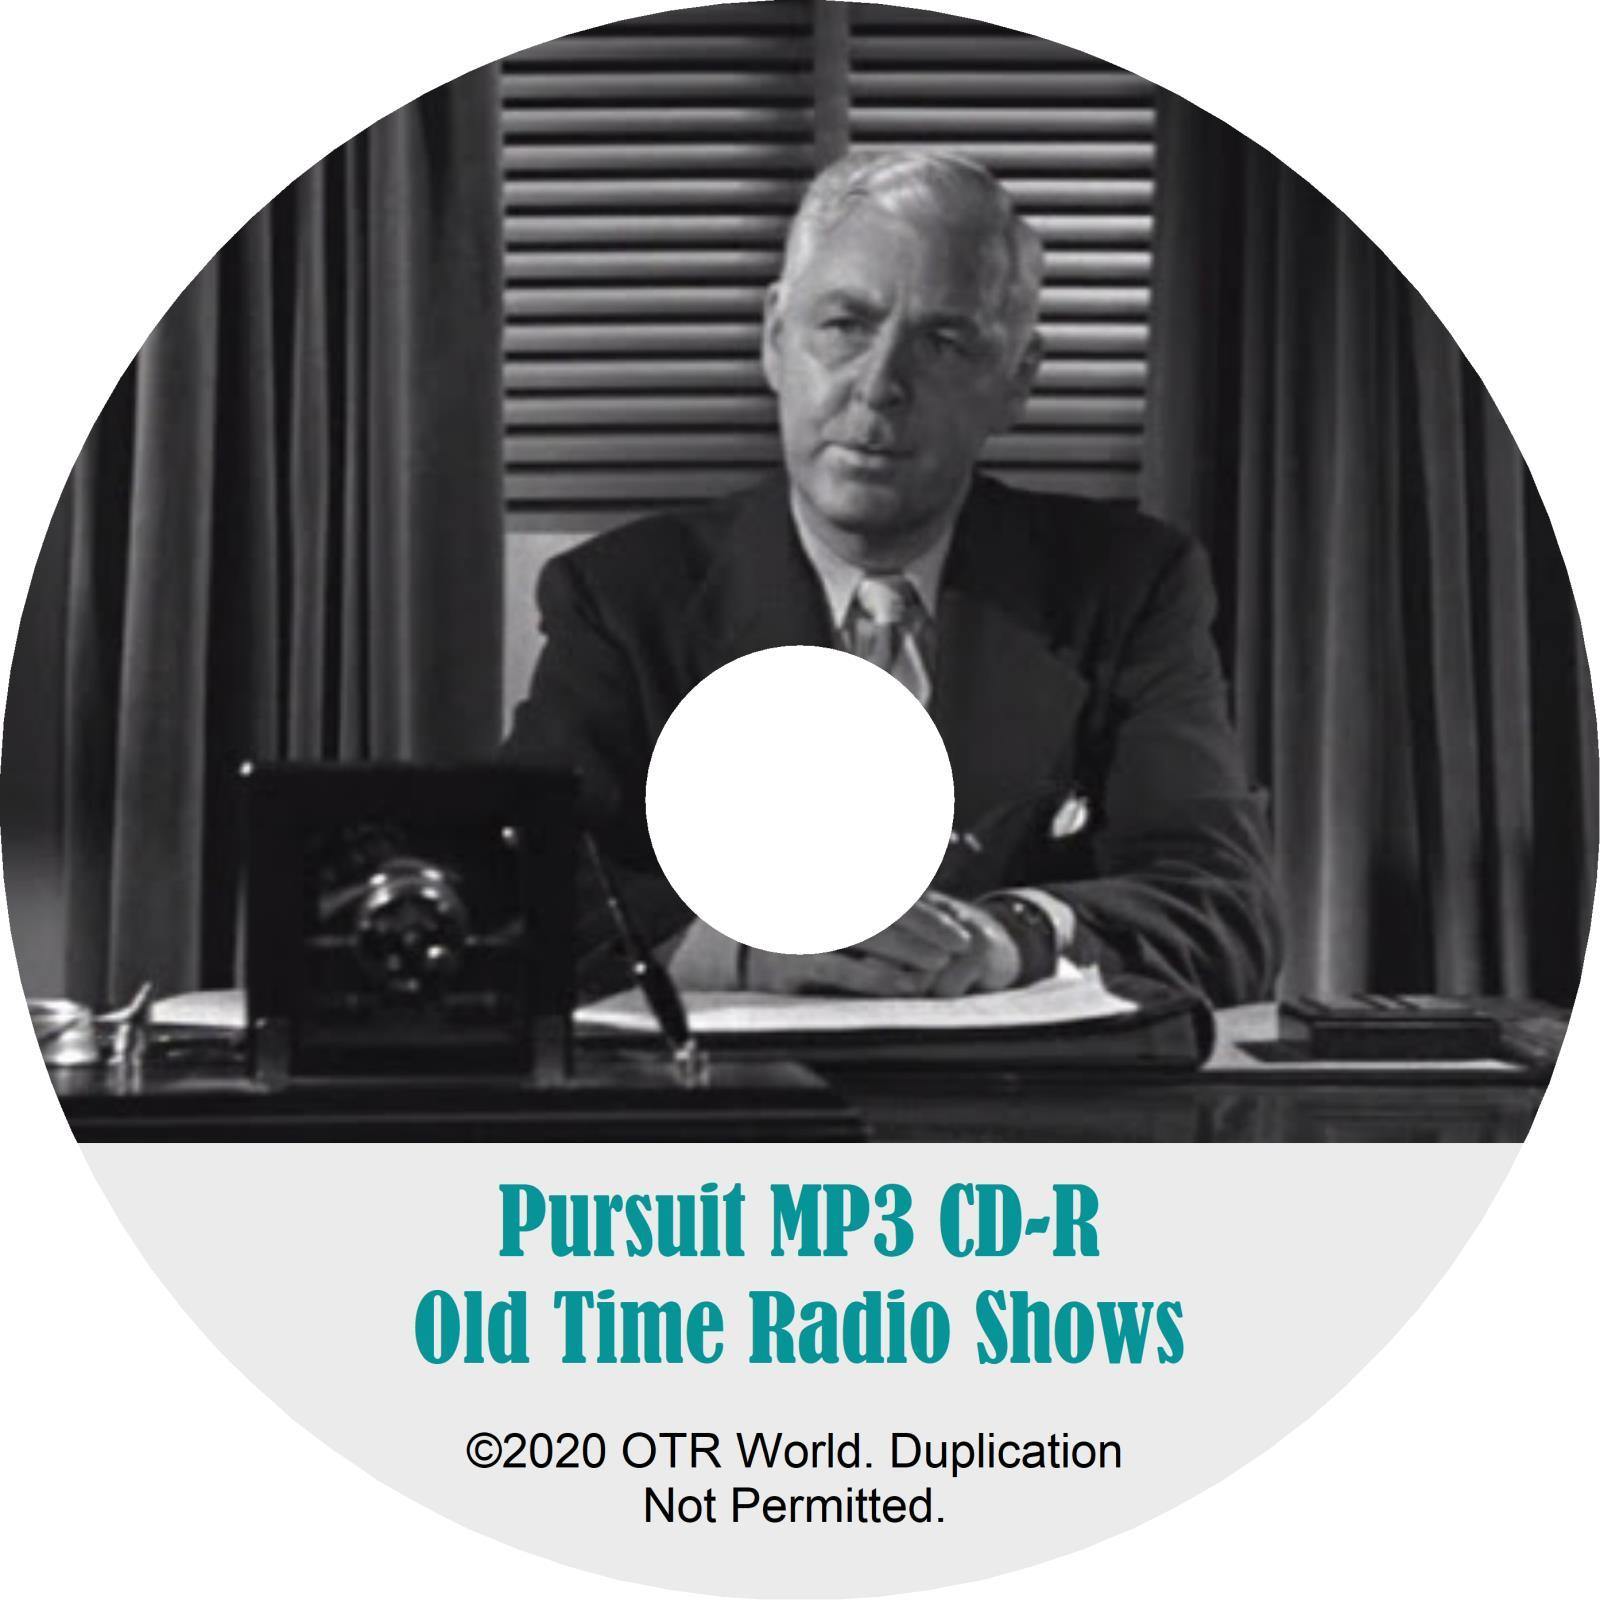 Pursuit OTR Old Time Radio Shows MP3 On CD-R 13 Episodes - OTR World